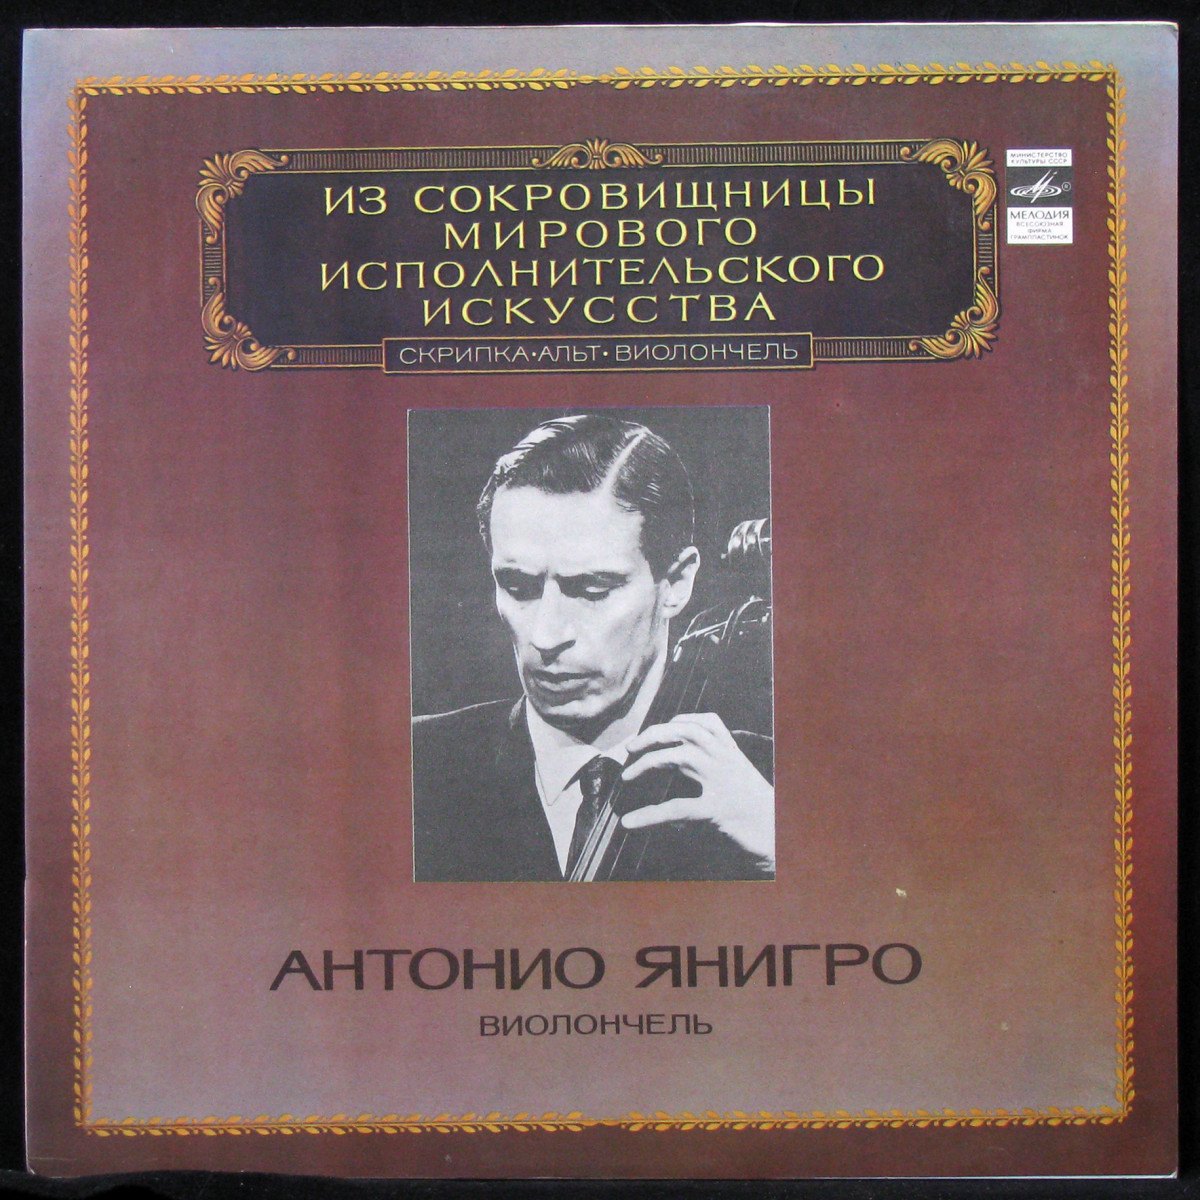 LP Antonio Janigro — Cello Concertos: L. Boccherini / A. Vivaldi / J. S. Bach (mono) фото